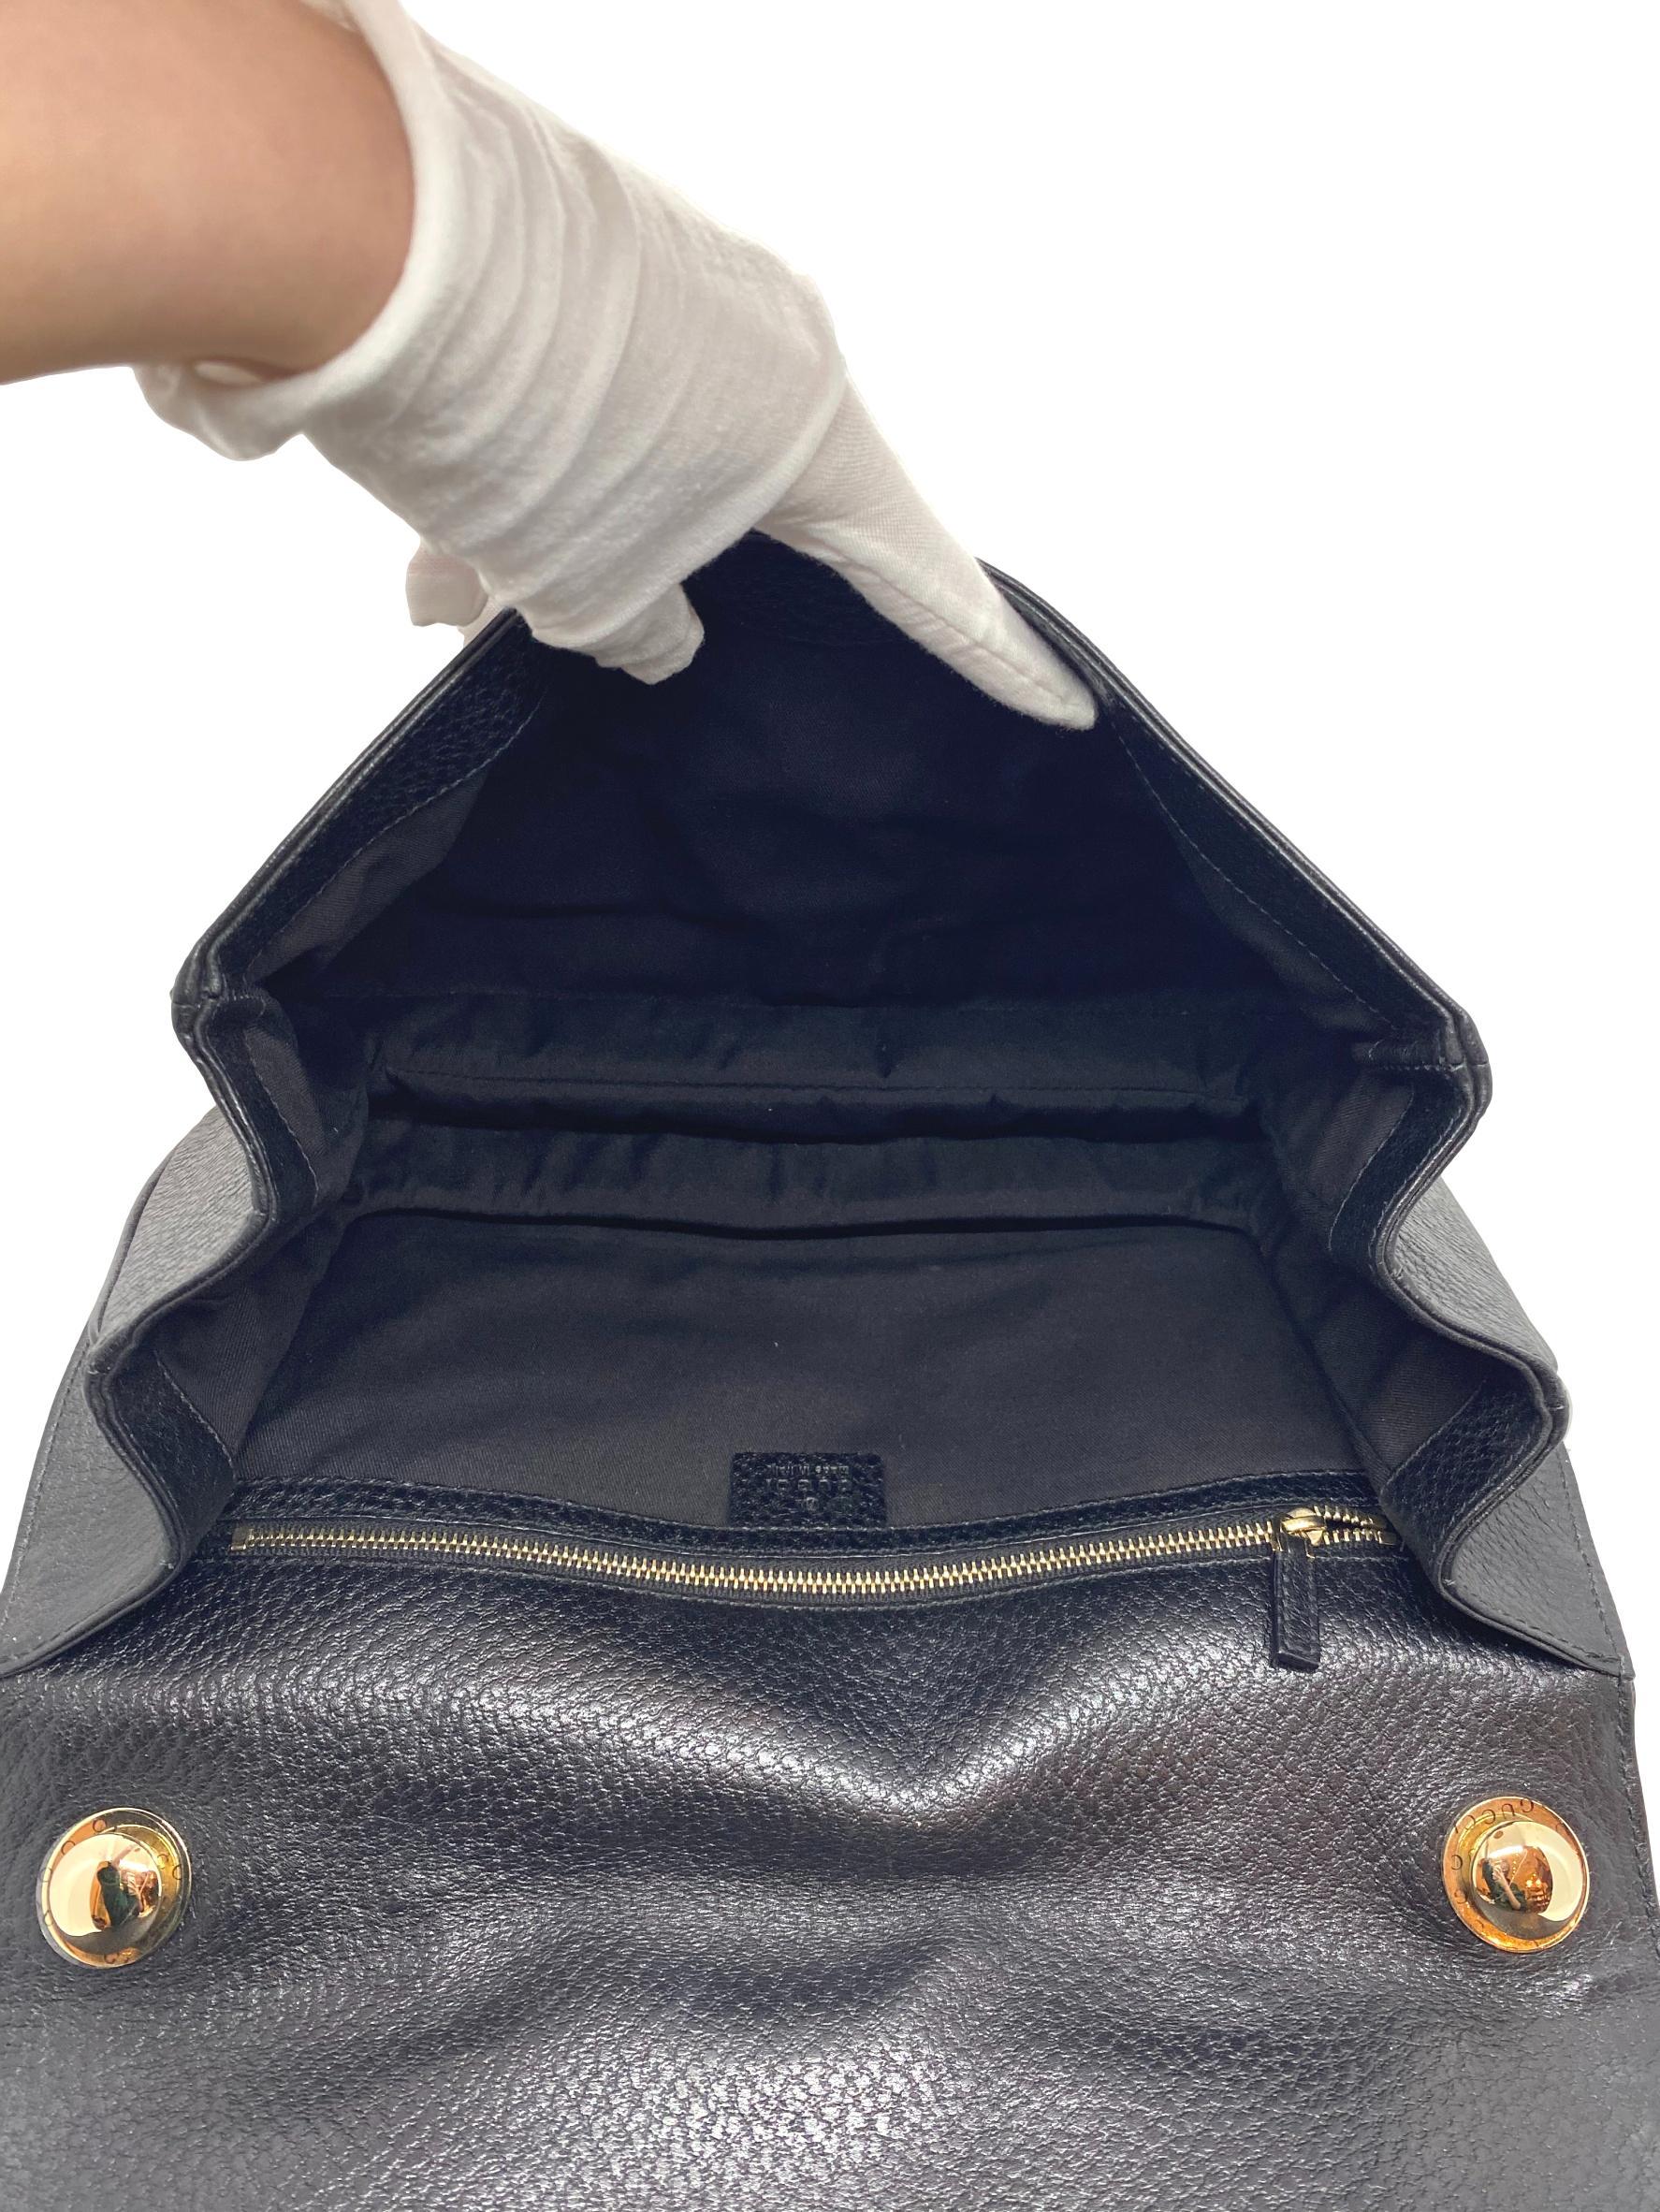 Gucci Web Pebbled Calfskin Blondie Shoulder Top Handle Flap Bag by Tom Ford 4